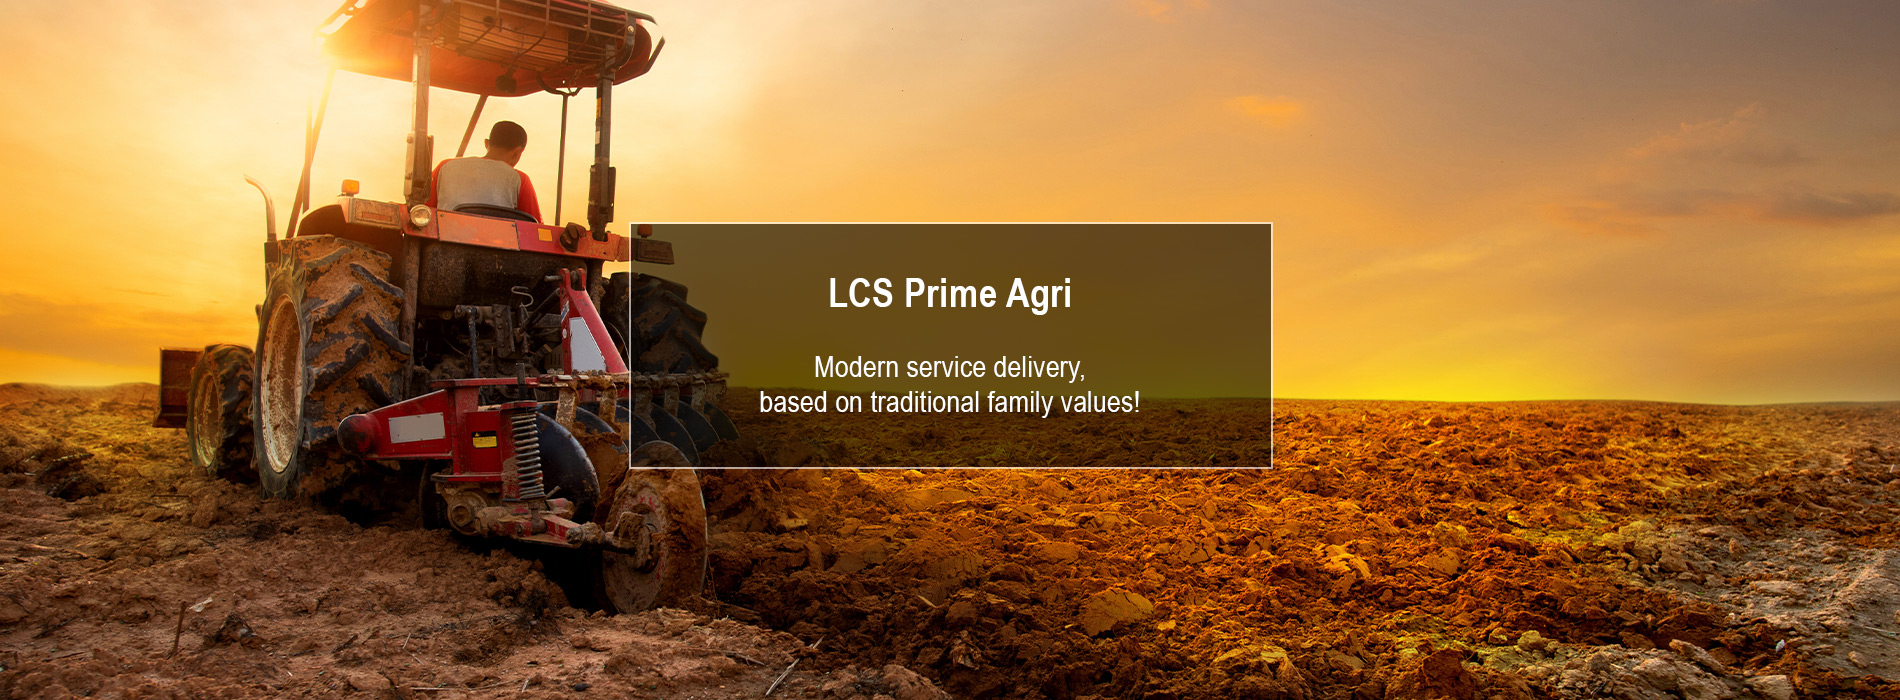 LCS Prime Agri